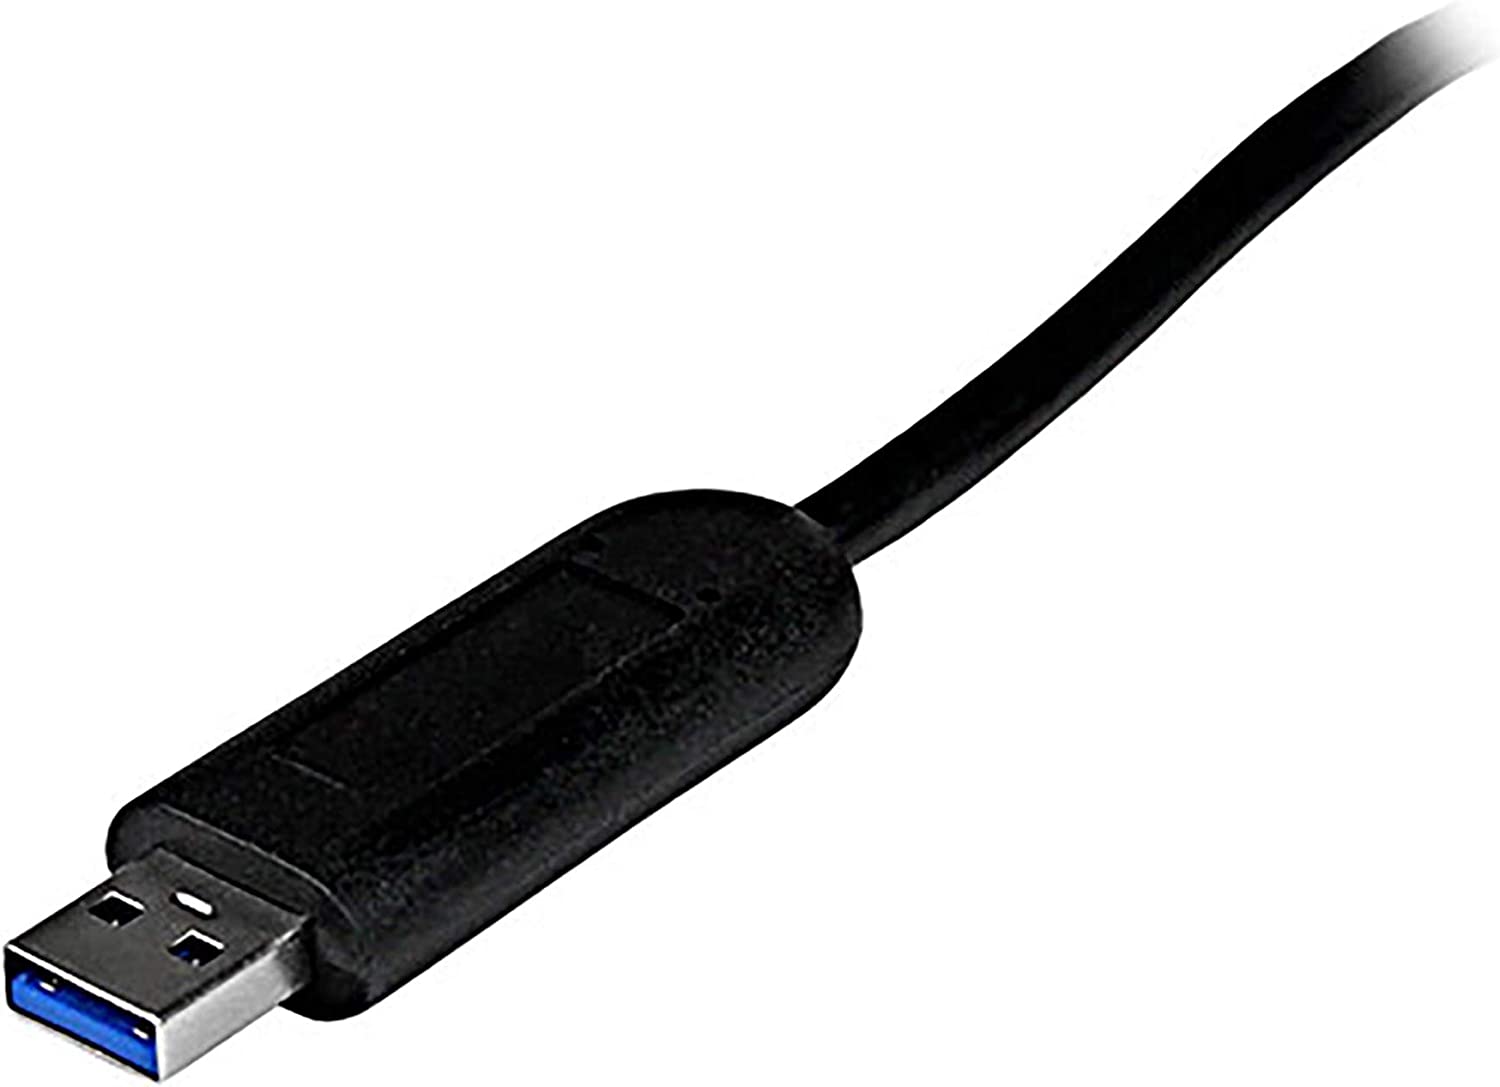 StarTech.com 4-Port USB 3.0 Hub with Built-in Cable - SuperSpeed Laptop USB Hub - Portable USB Splitter - Mini USB Hub (ST4300PBU3), Black